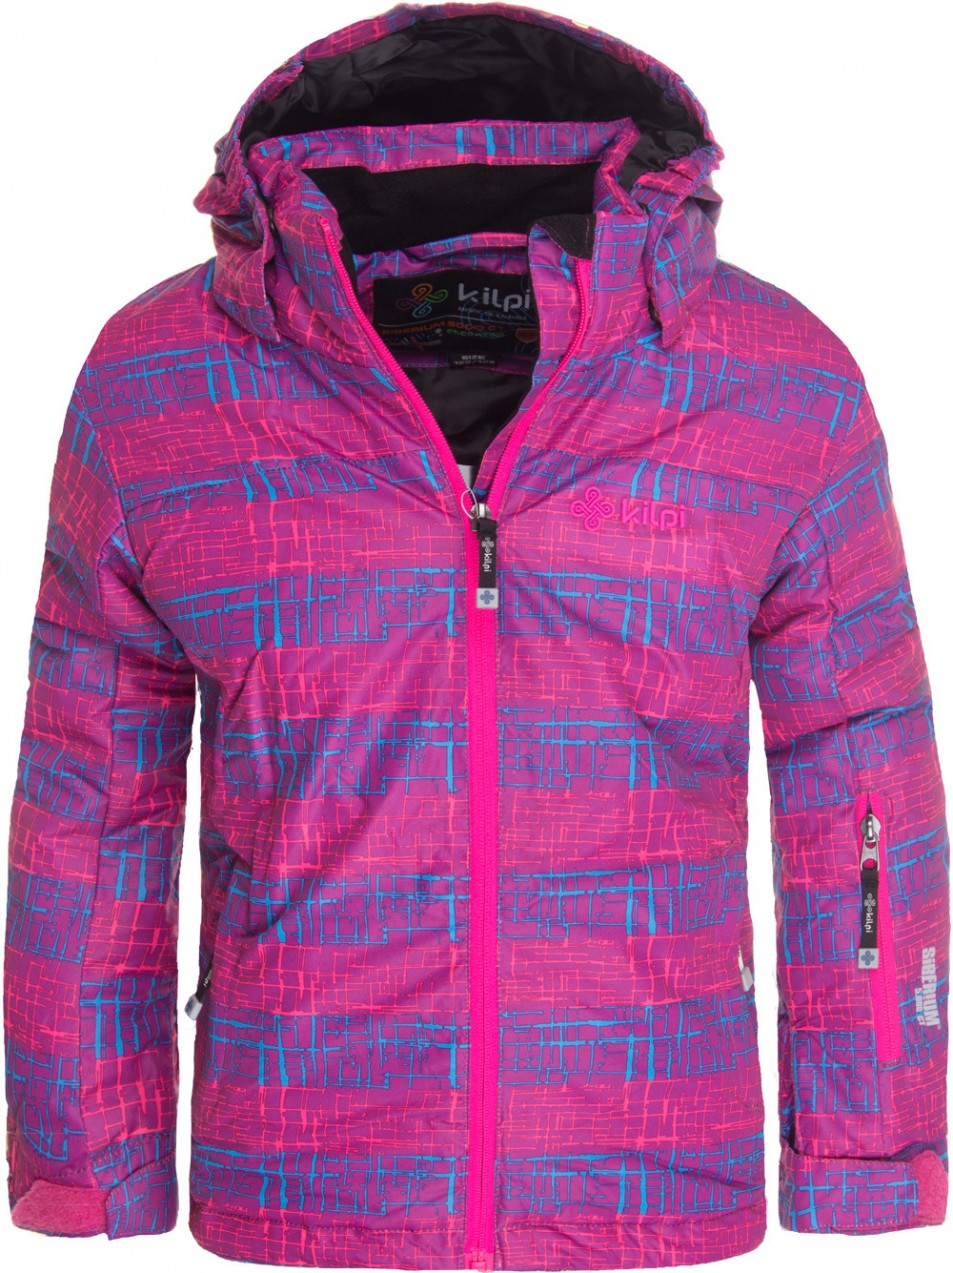 Ski jacket for children Kilpi GENOVESA-JG